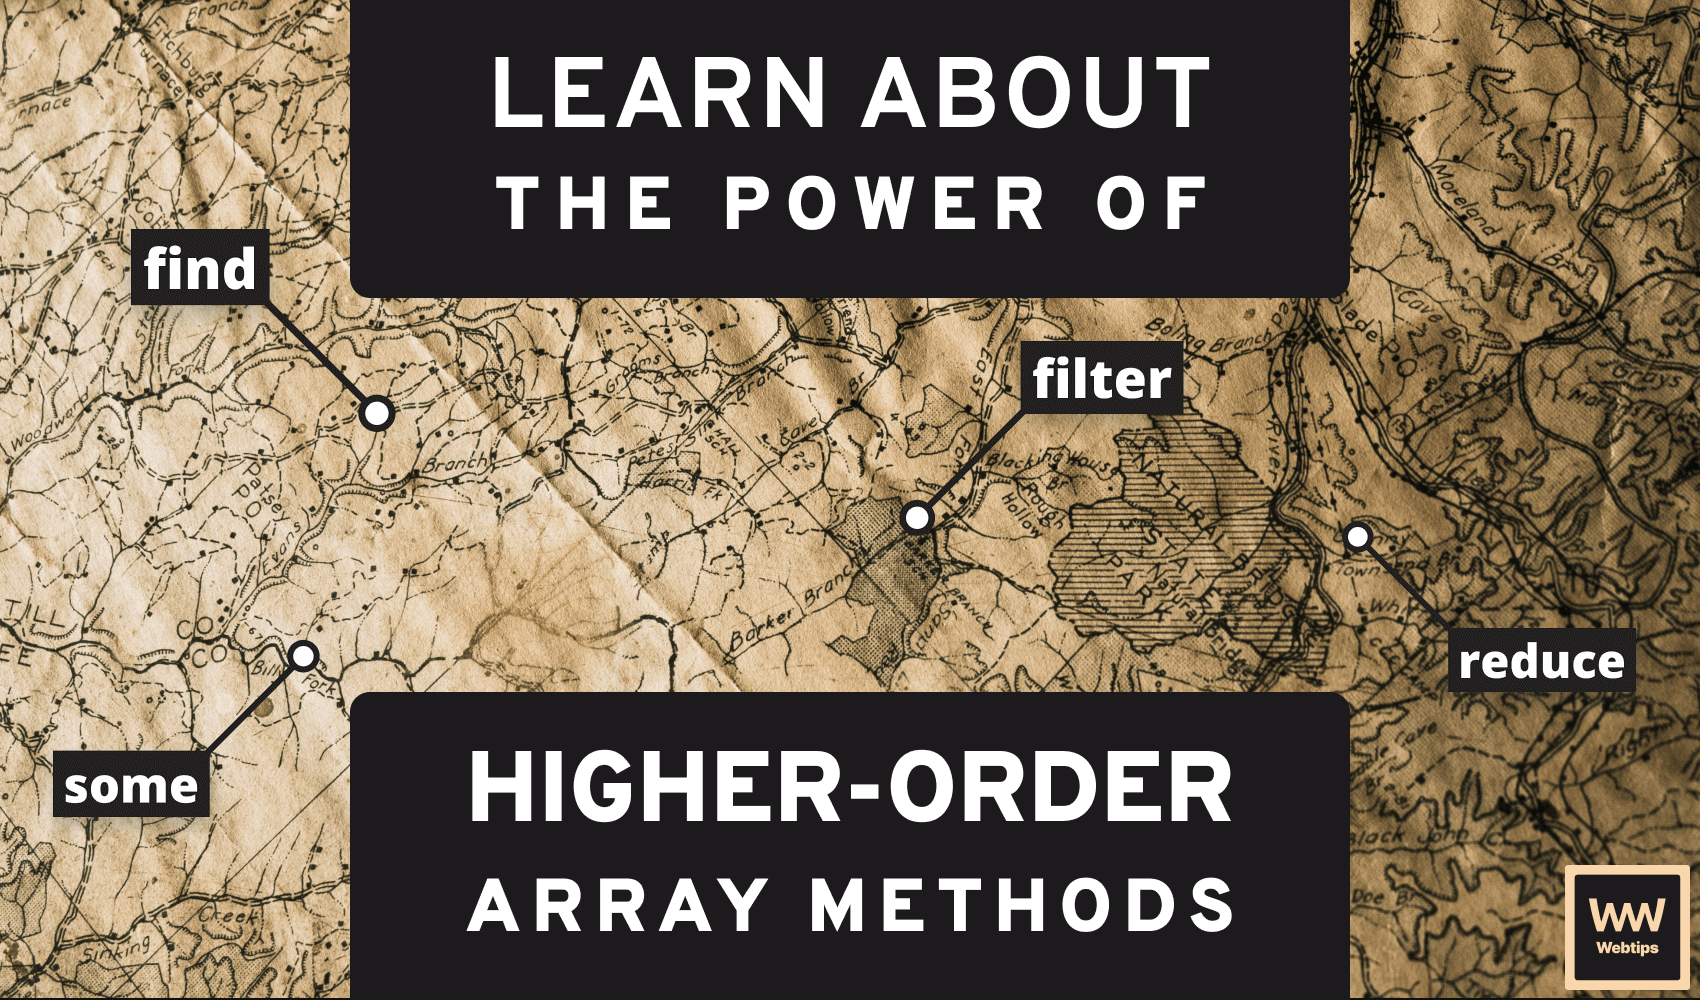 The Power of Higher-Order Array Methods